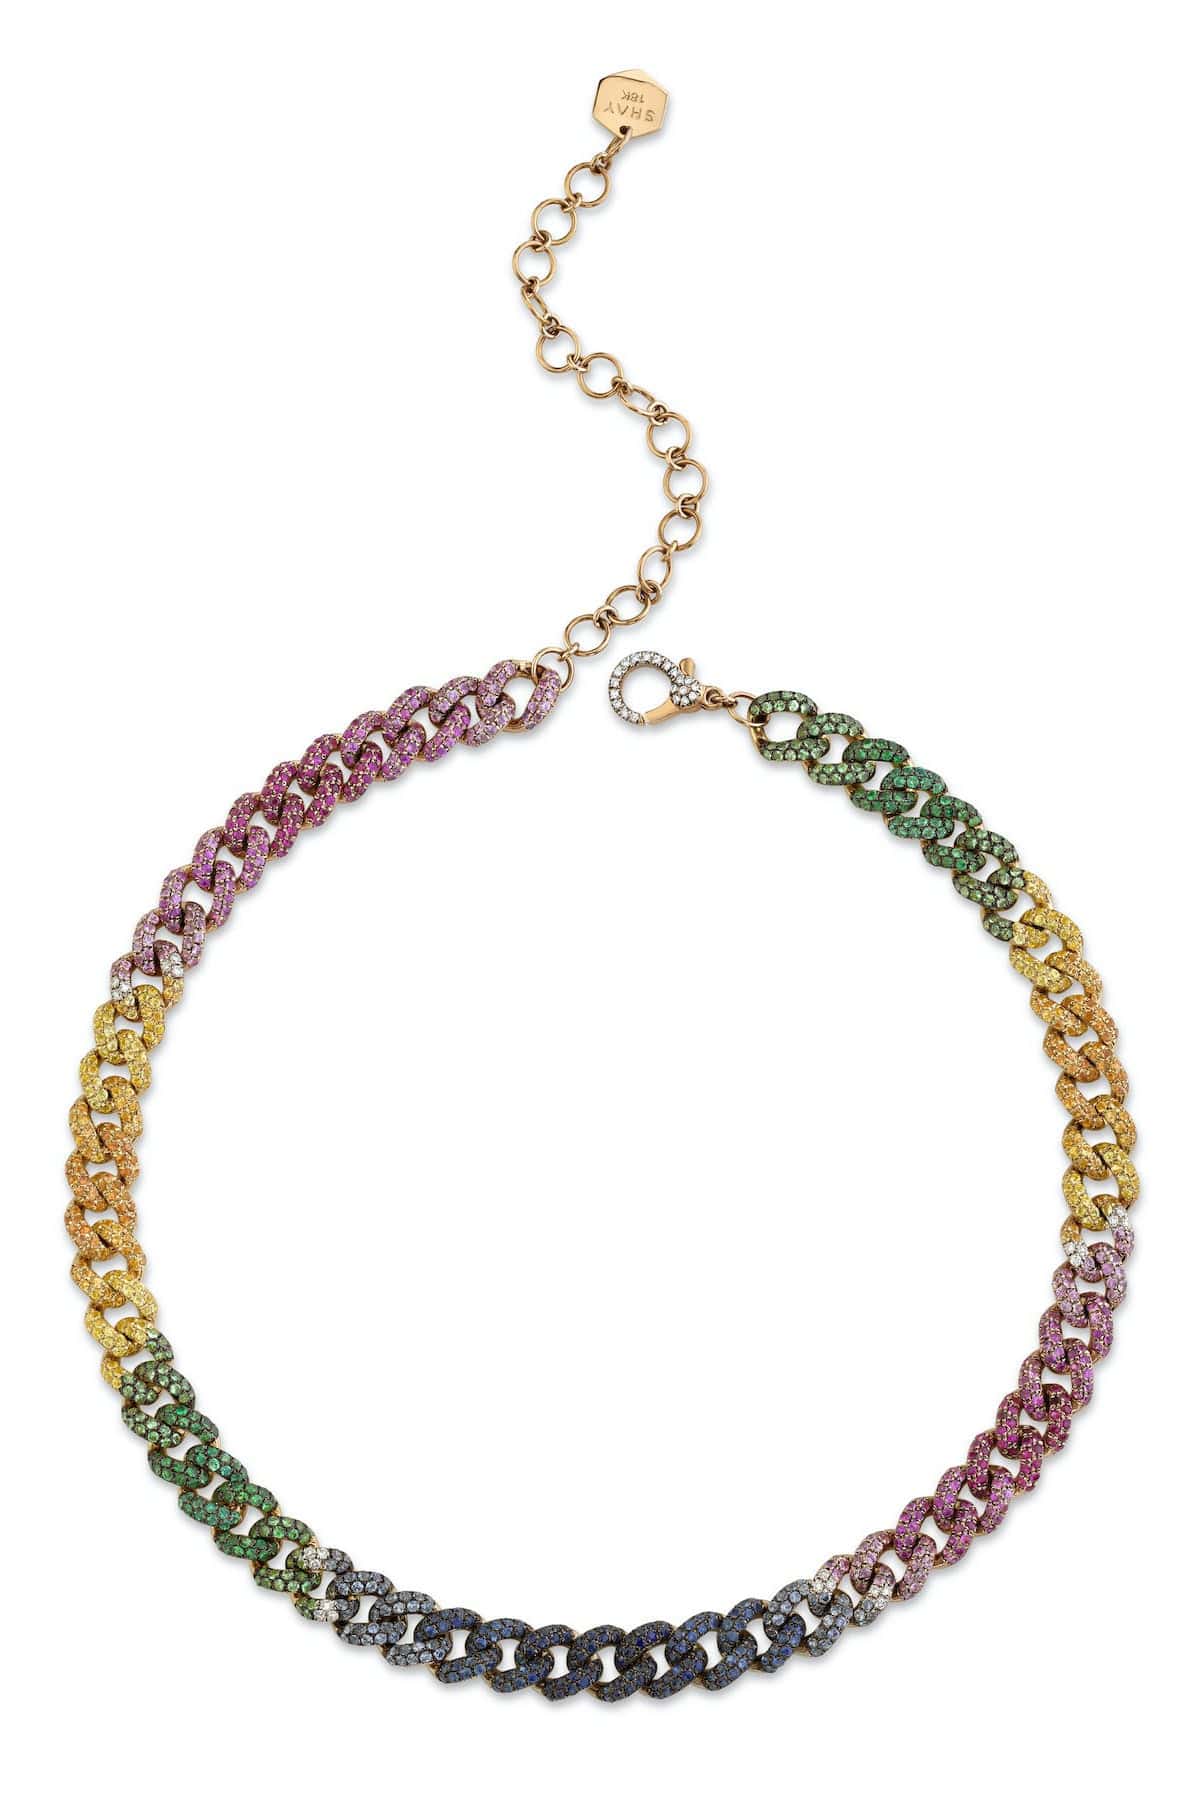 SHAY JEWELRY-Medium Rainbow Pave Link Necklace-YELLOW GOLD